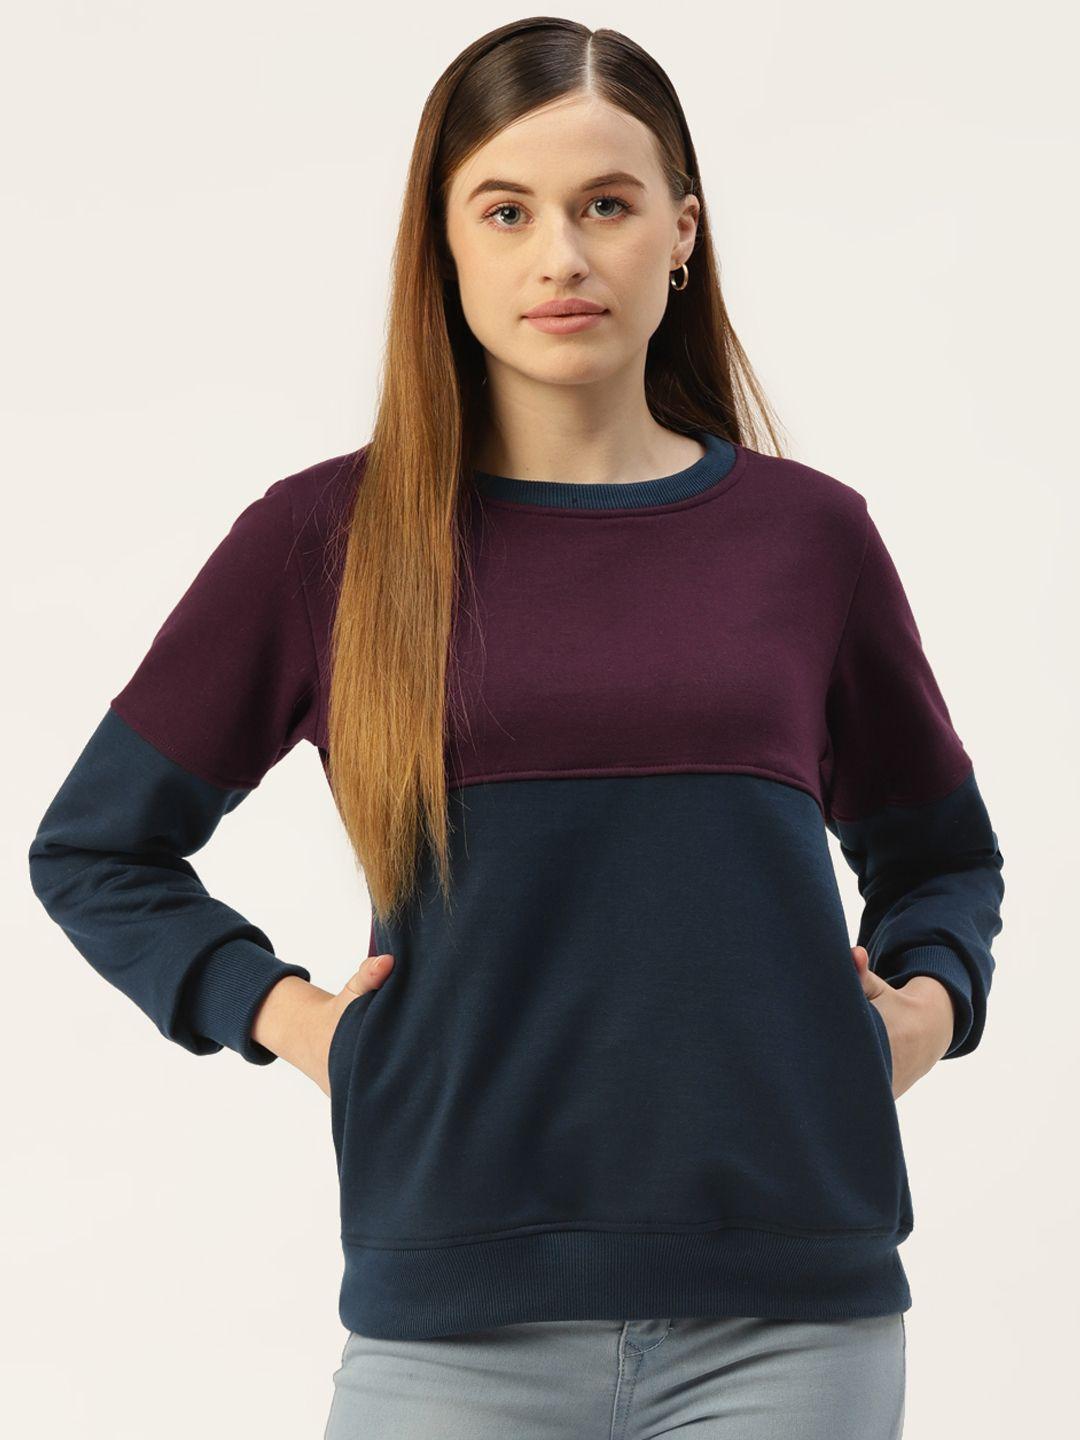 brinns women teal blue & burgundy colourblocked sweatshirt